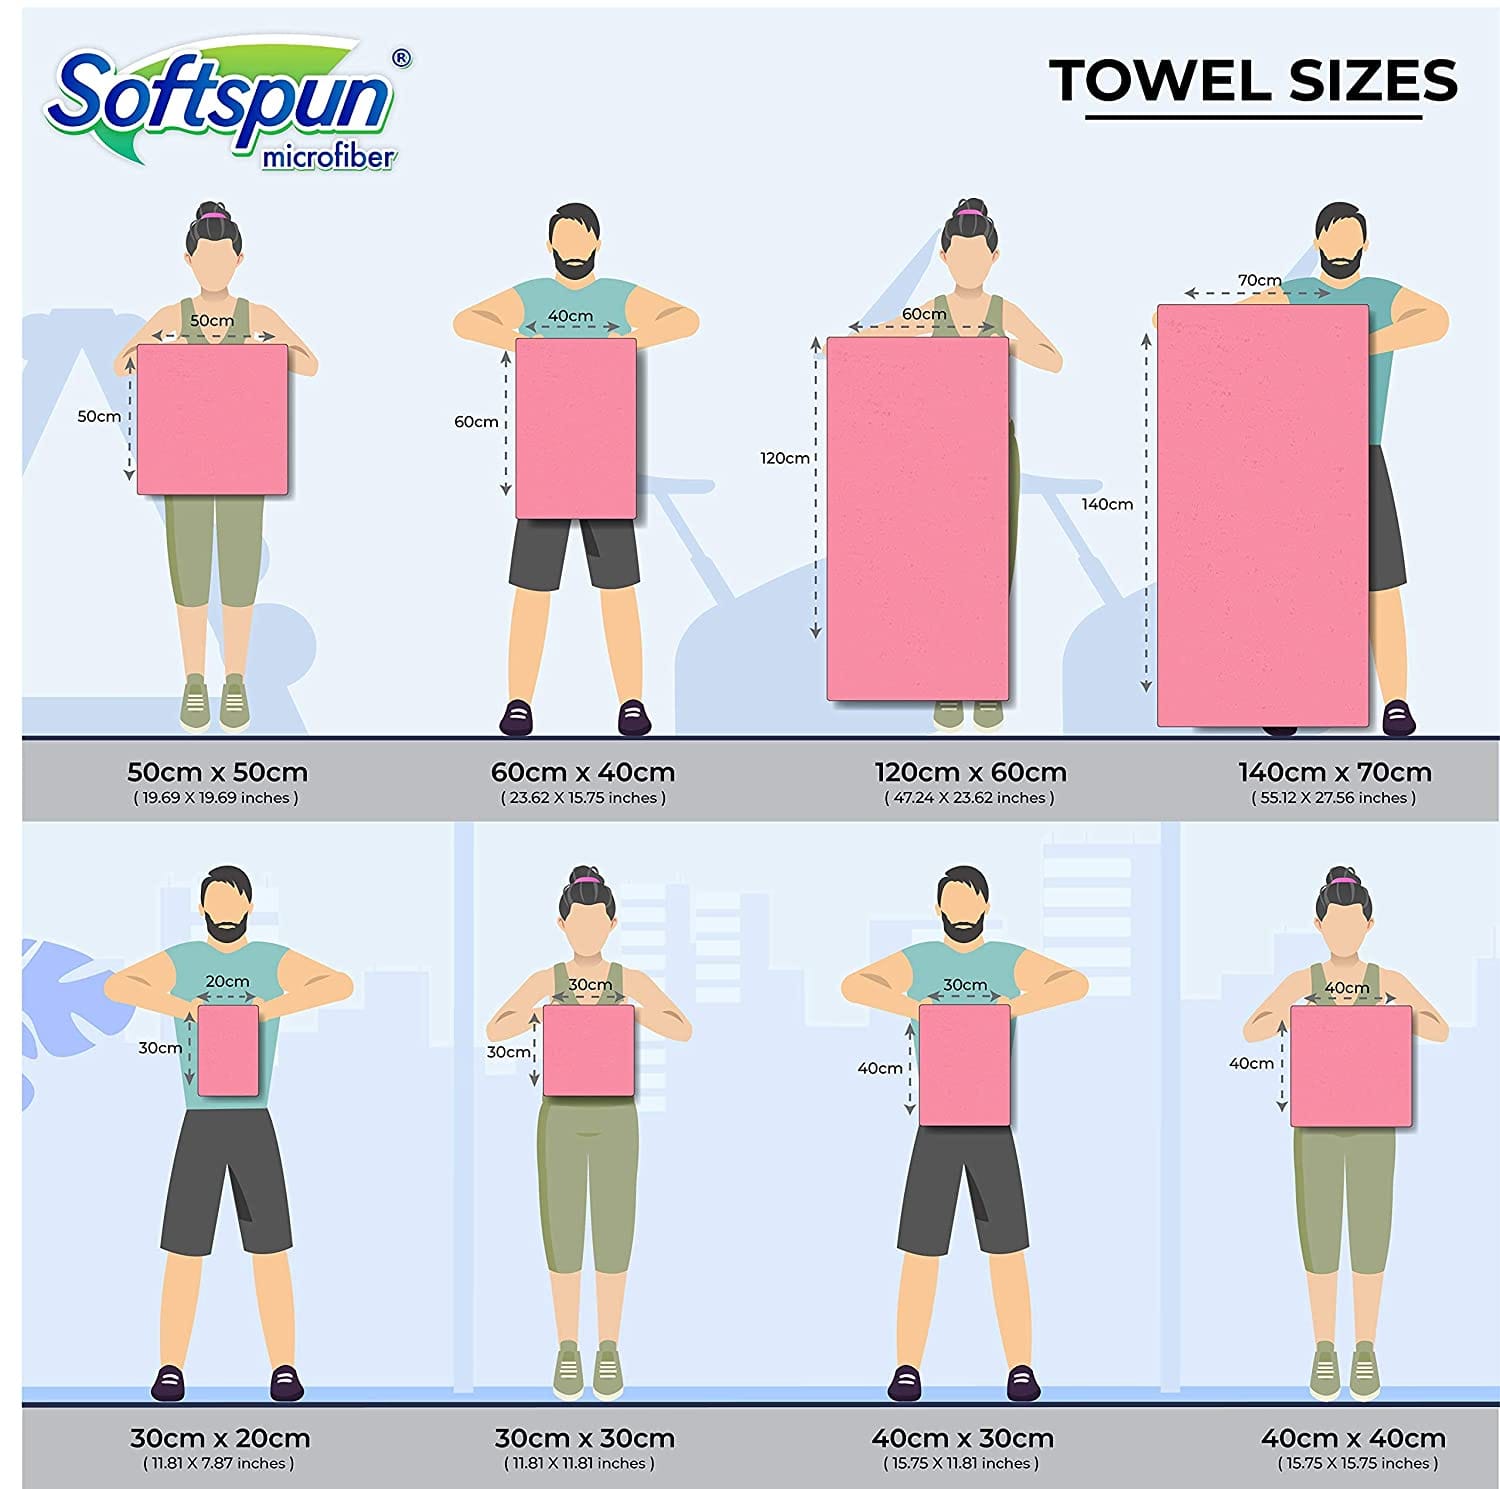 Unique Bargains 5pcs 26 inch x 13 inch Gray Microfiber Towel Clean Cloth for Car, Size: 26 x 13 inch(Large*W)